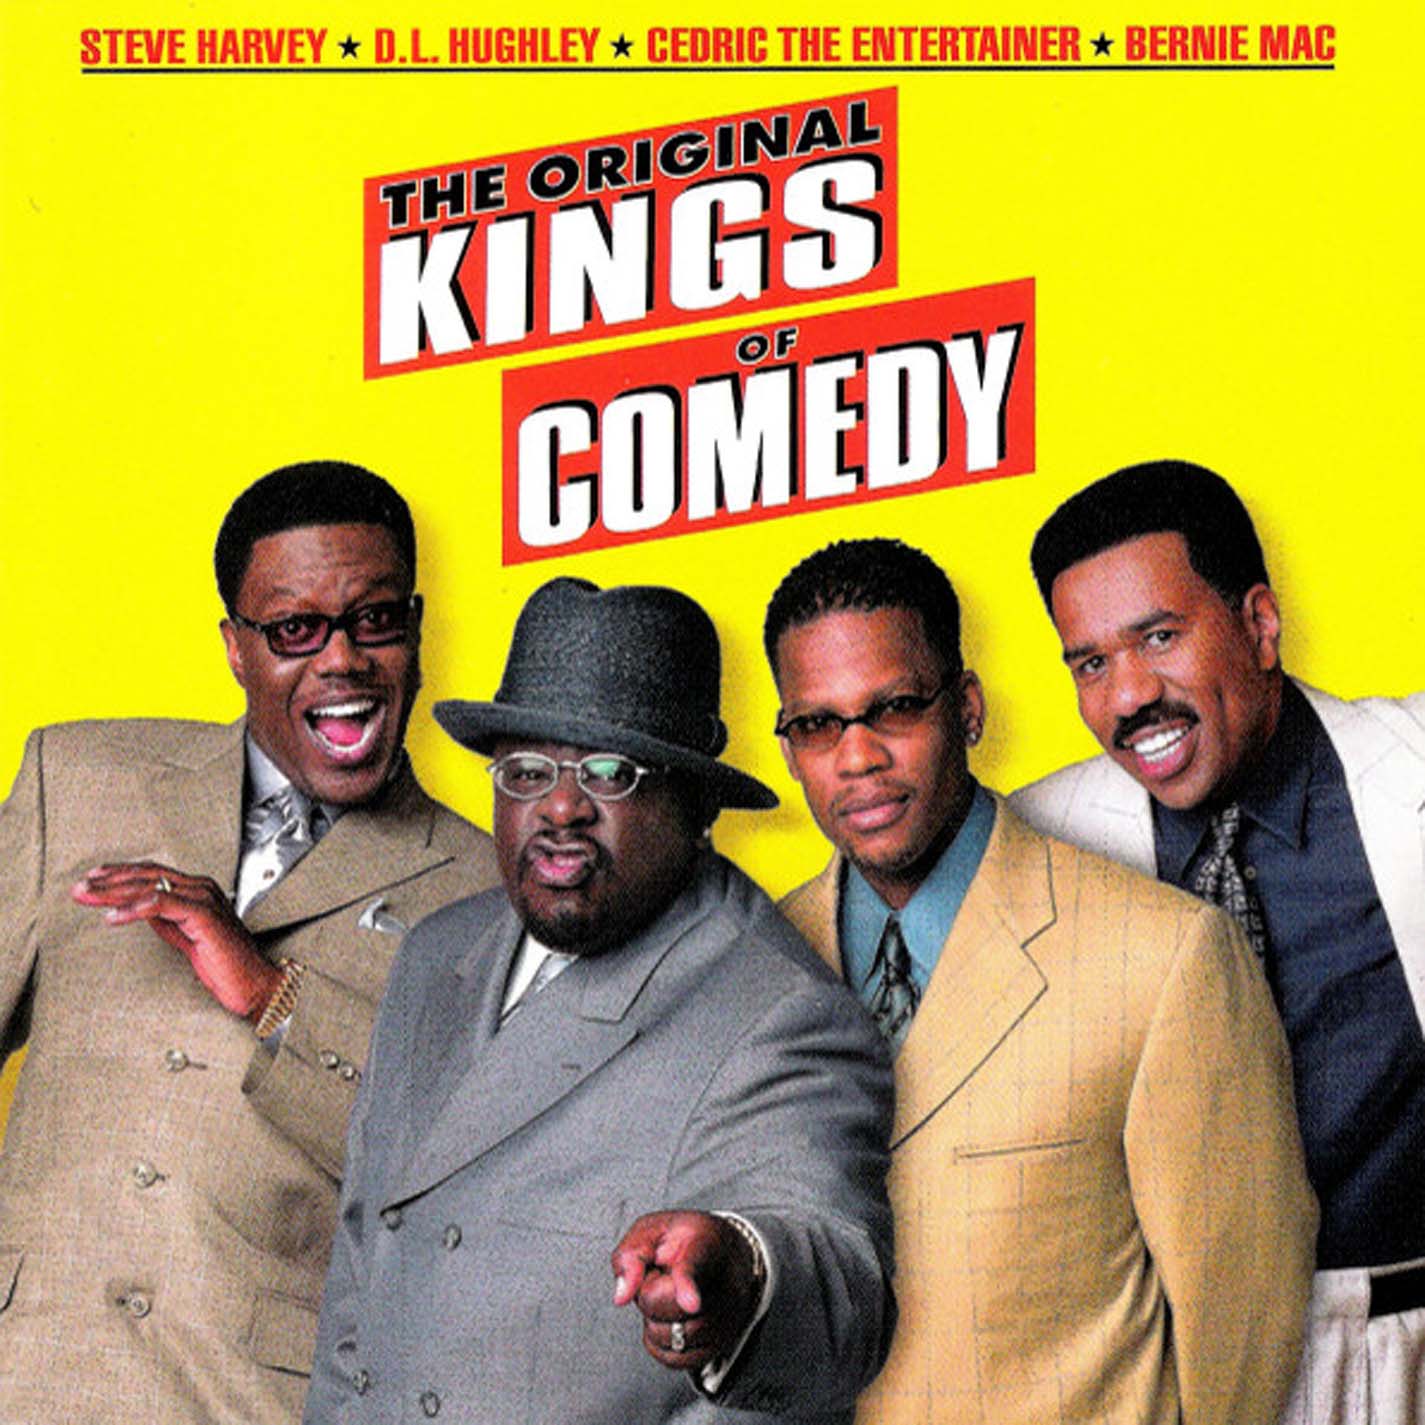 THE ORIGINAL KINGS OF COMEDY - COMEDY SOUNDTRACK (CD LP) c2000